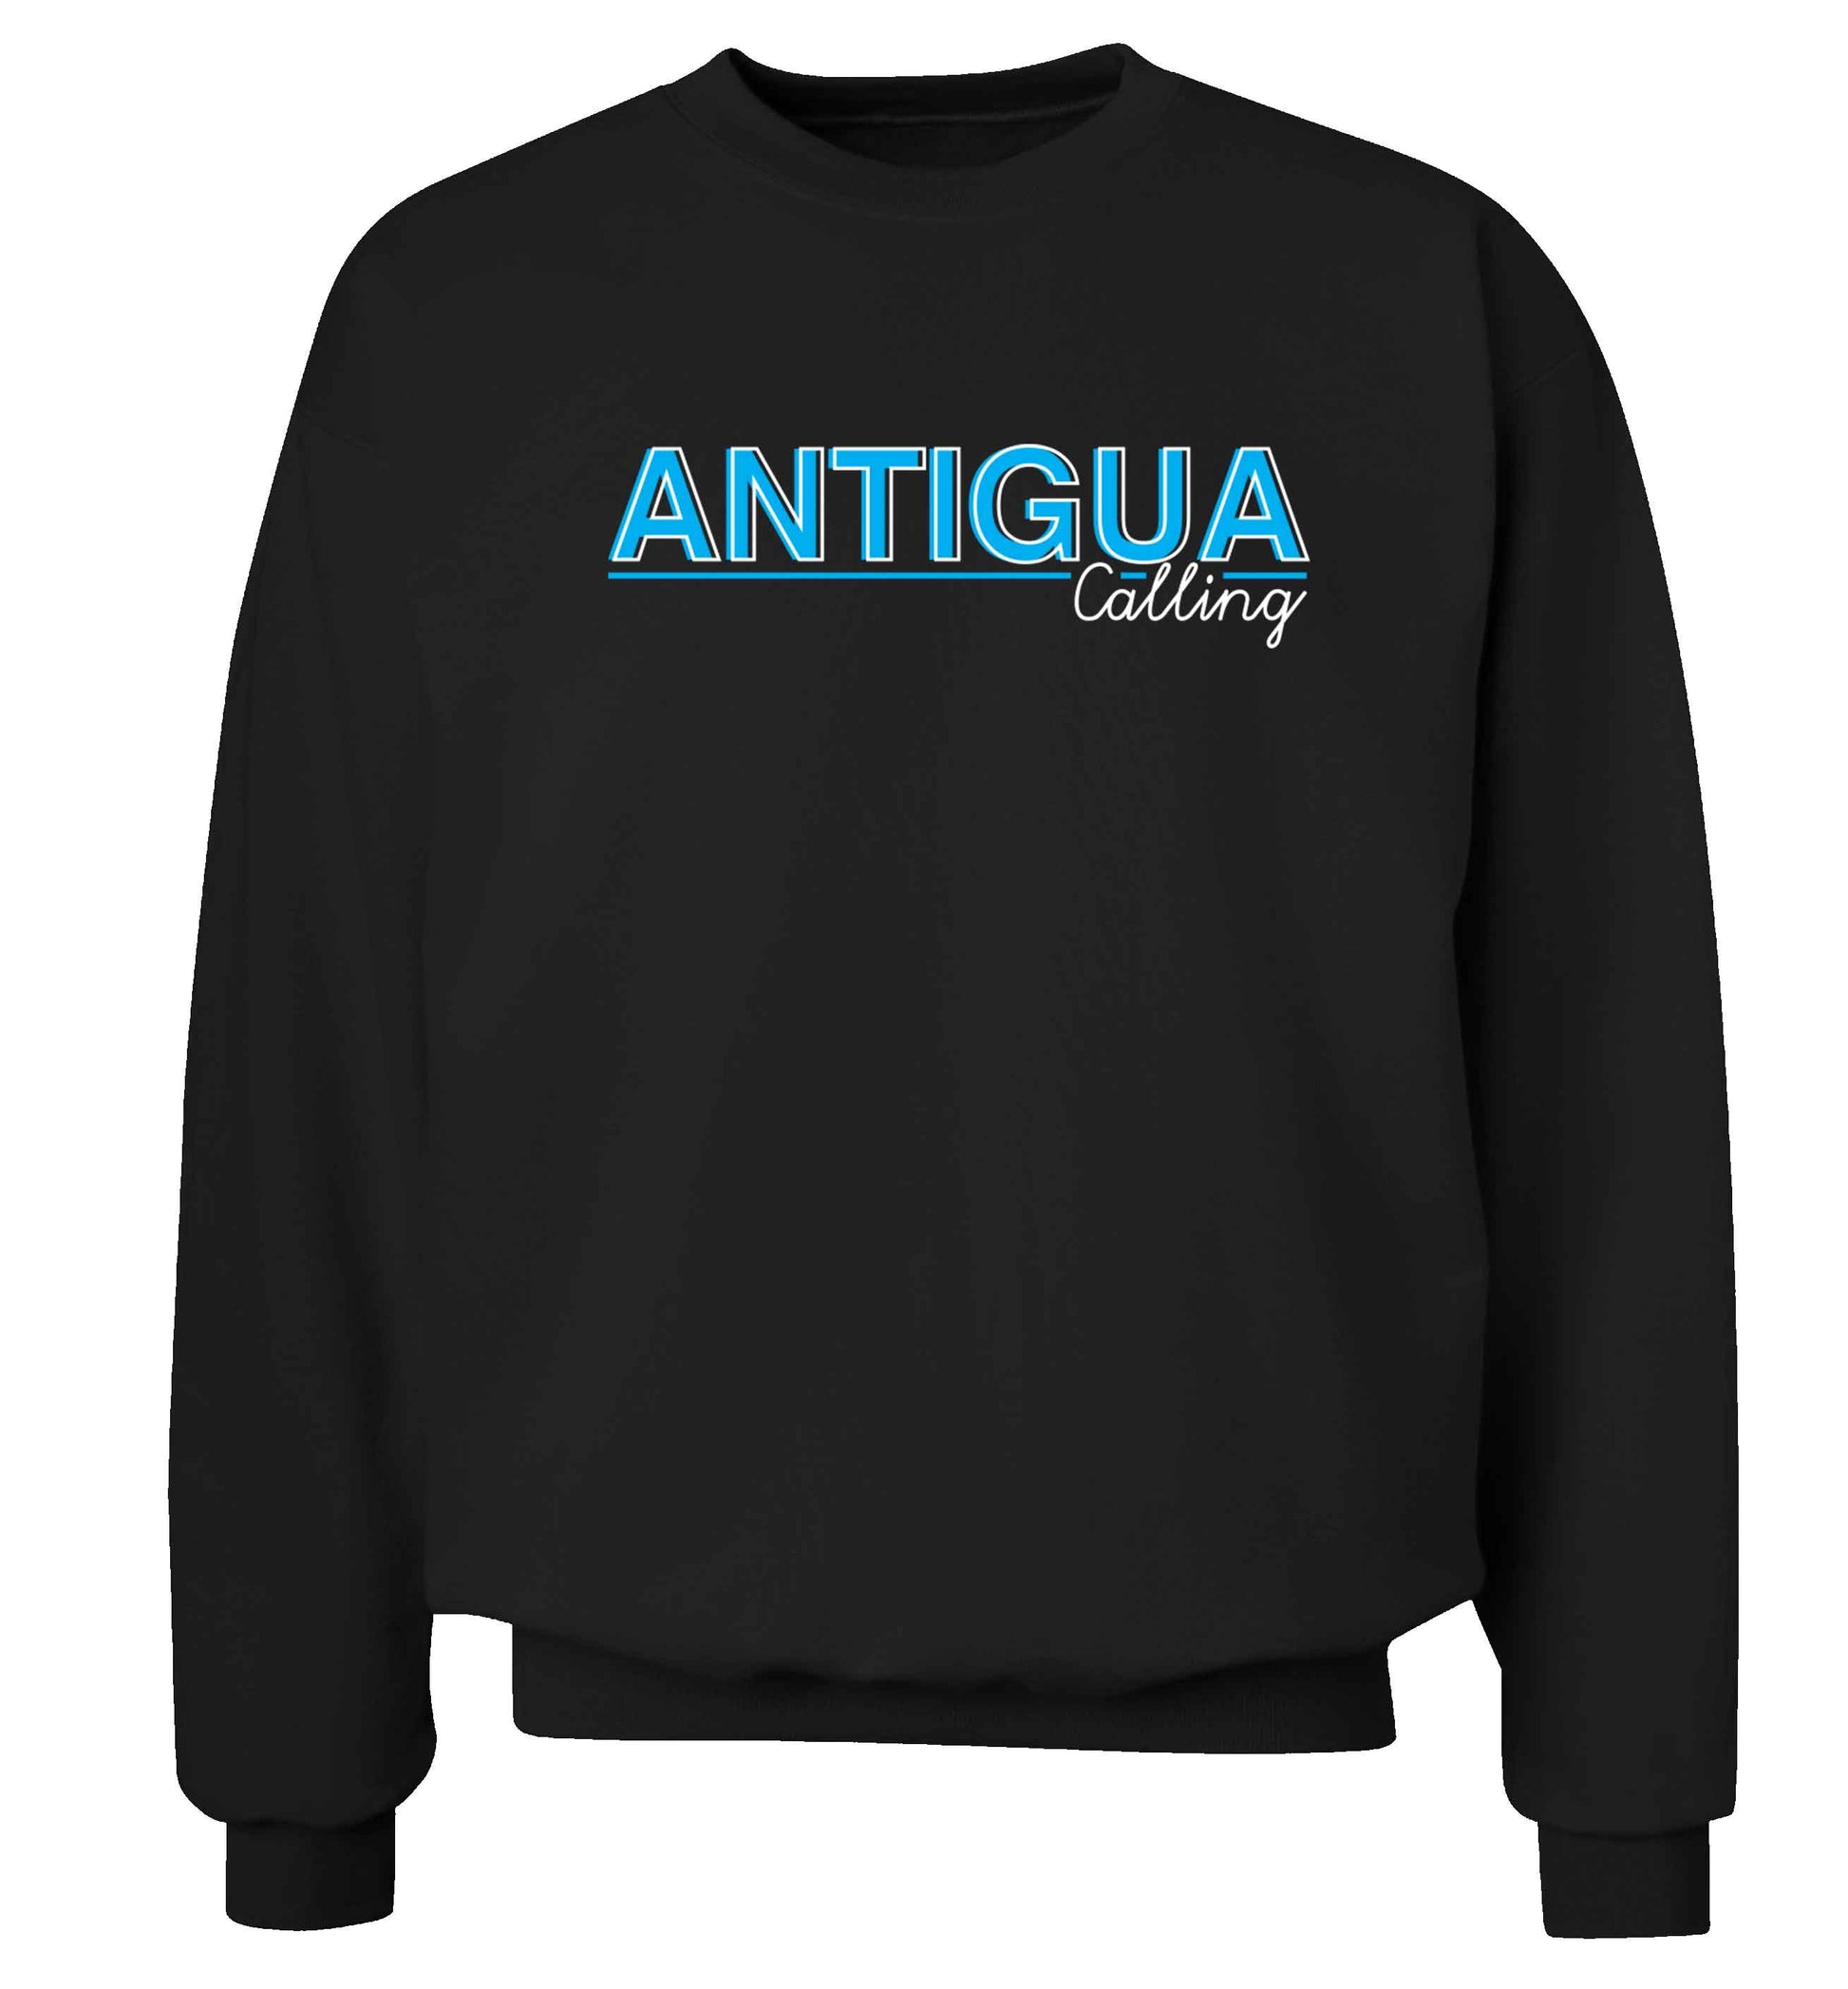 Antigua calling Adult's unisex black Sweater 2XL